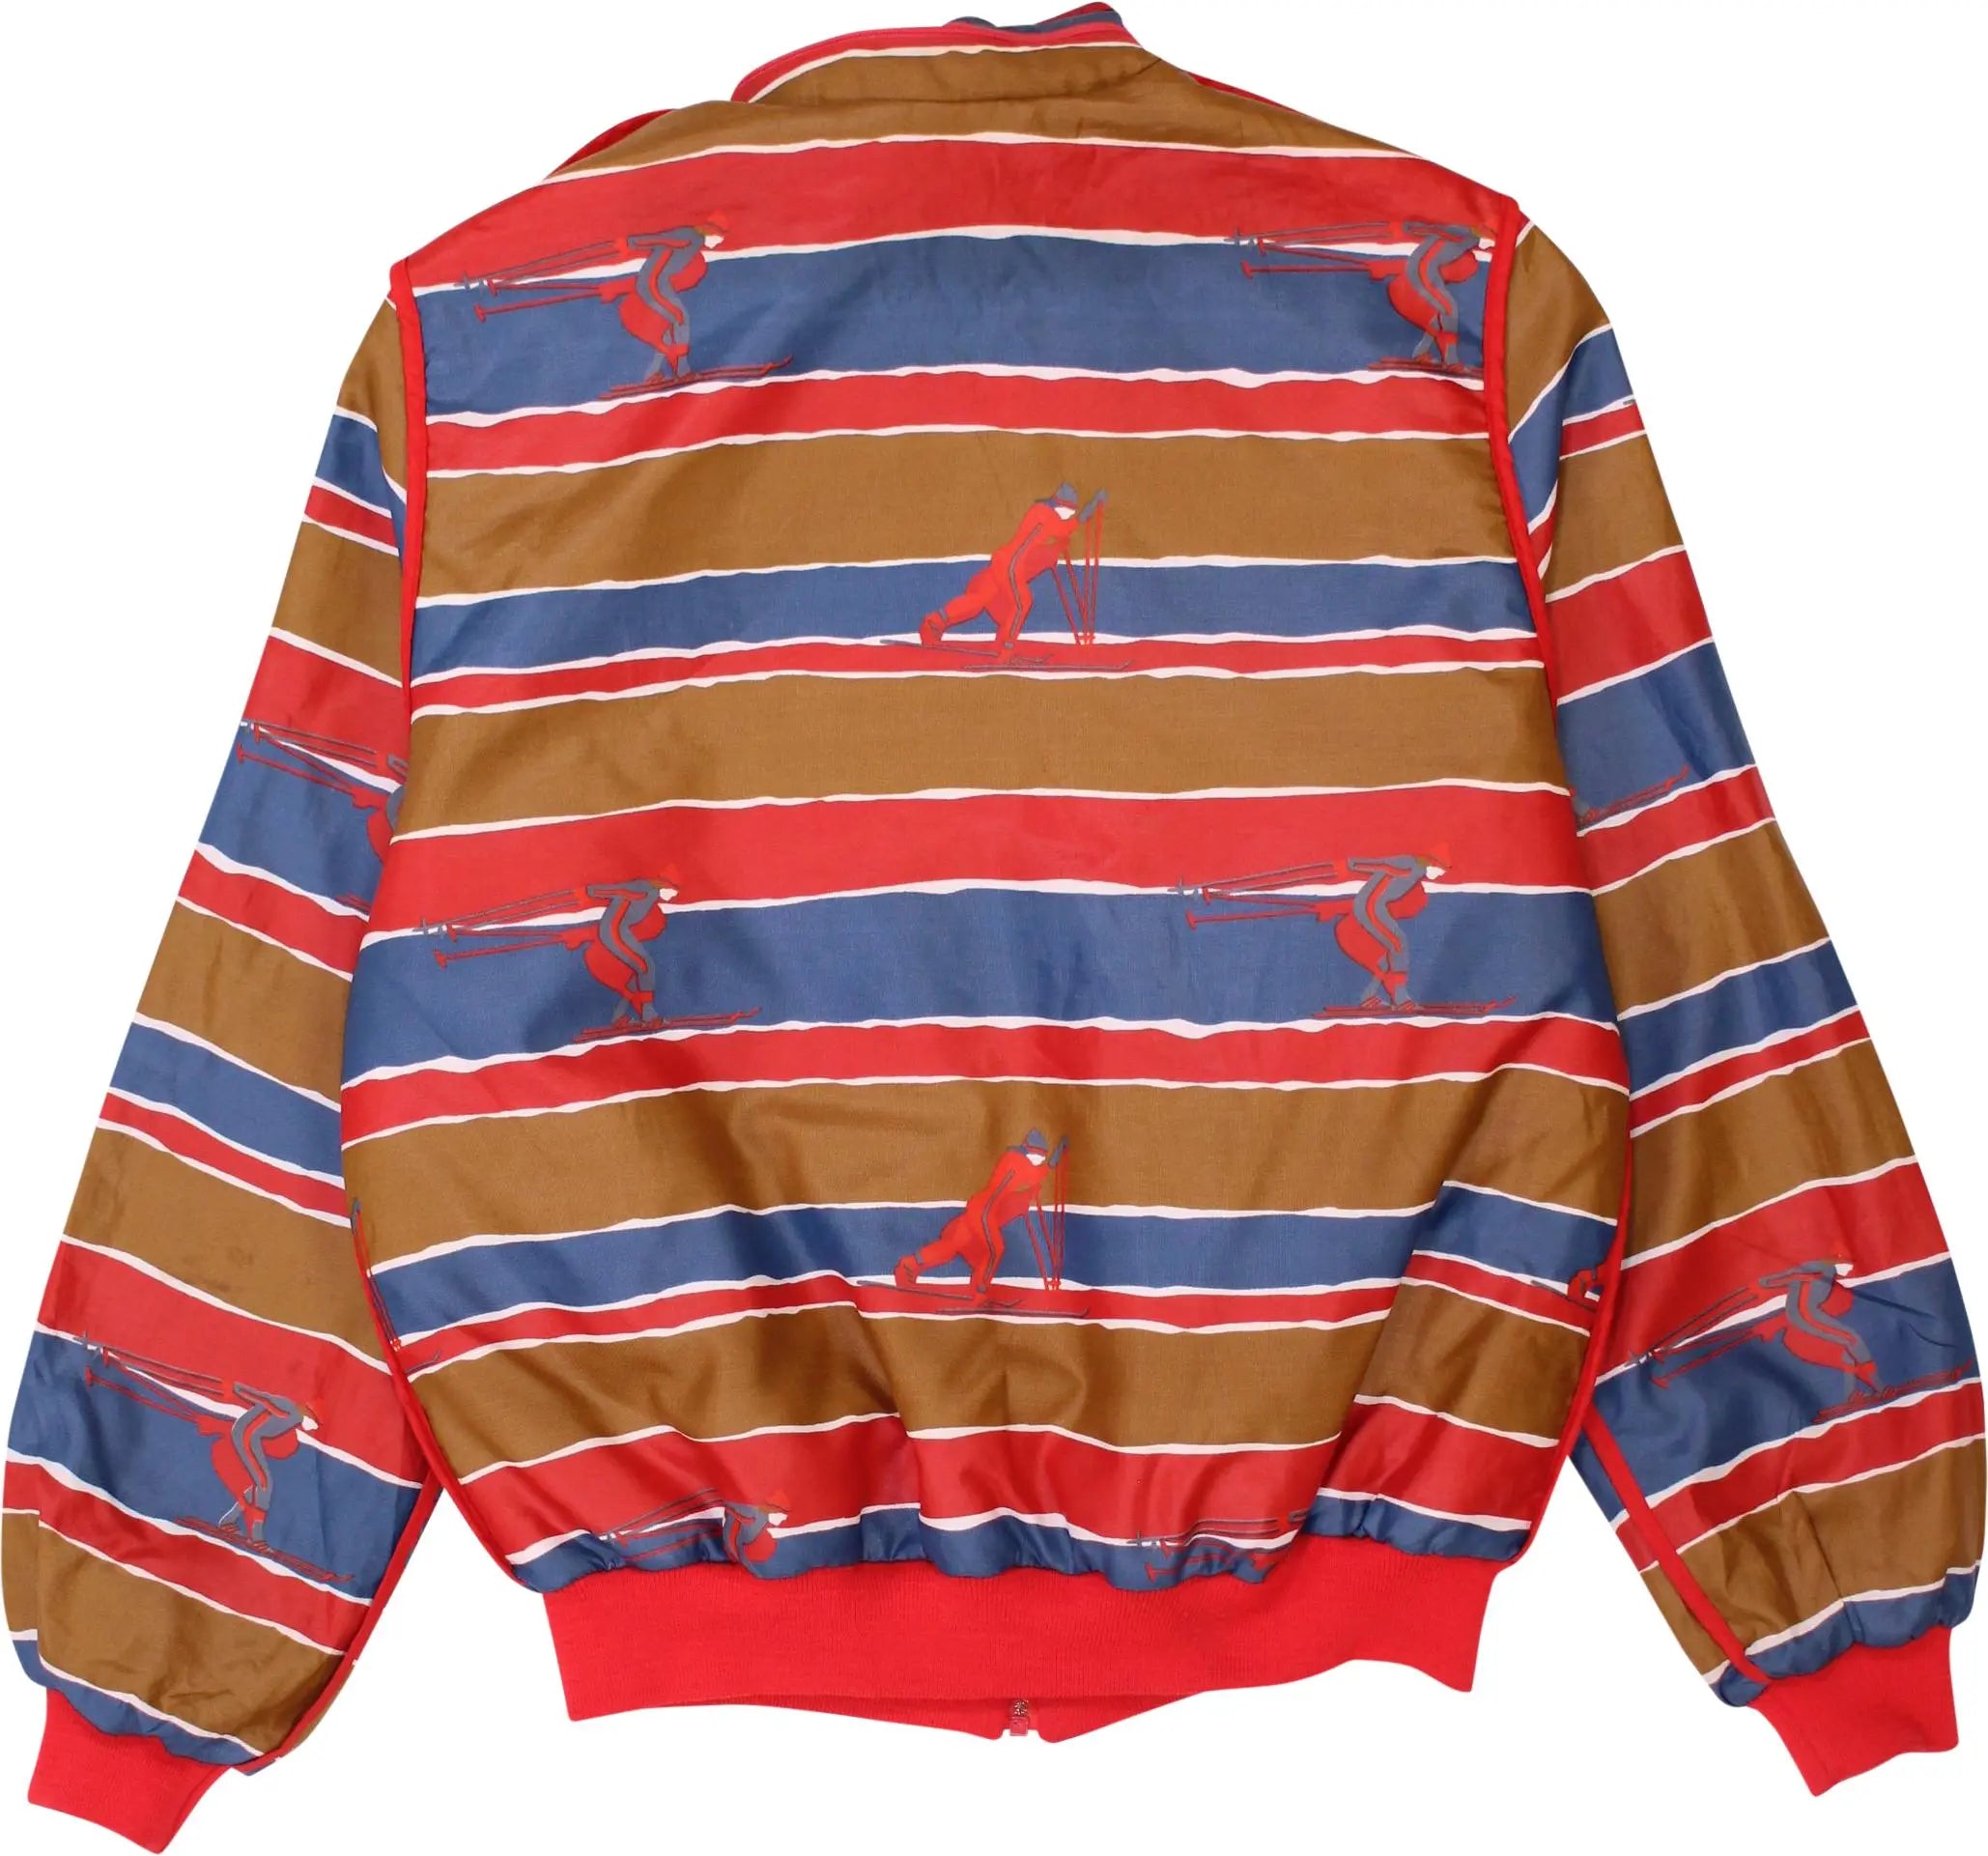 Golden Cup - Reversible Ski Print Jacket- ThriftTale.com - Vintage and second handclothing